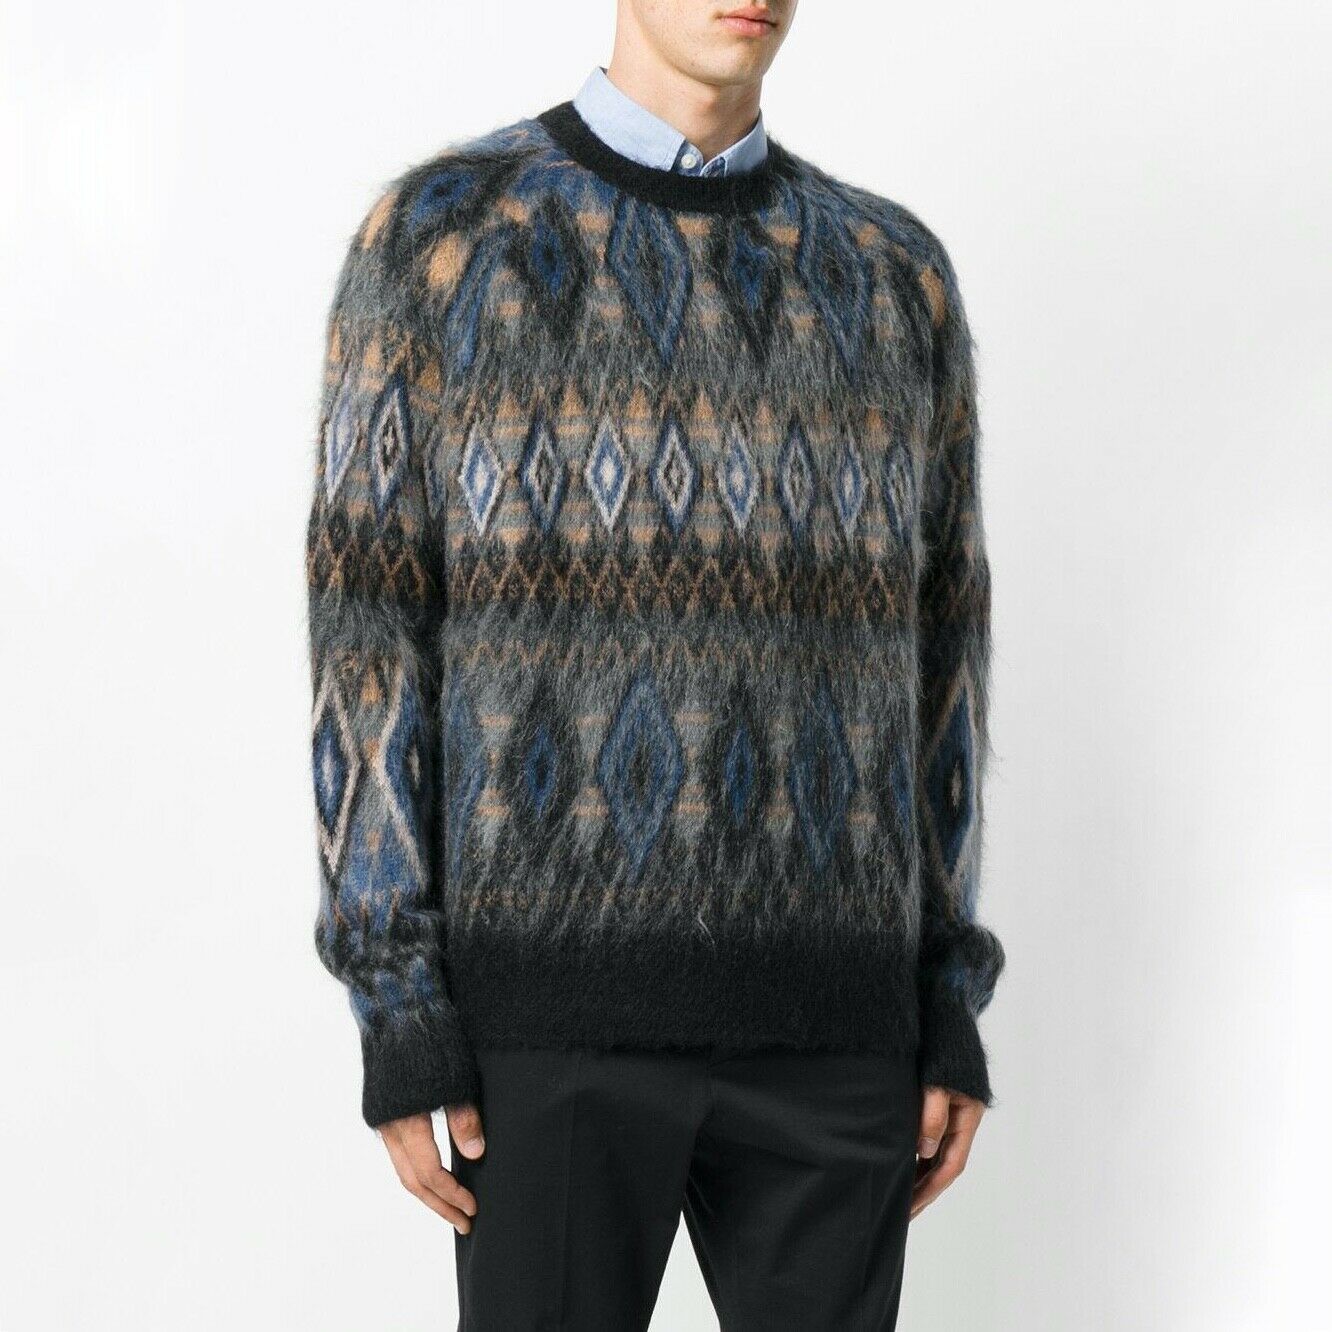 617-055 Men's New Mohair Sweater by Laneus